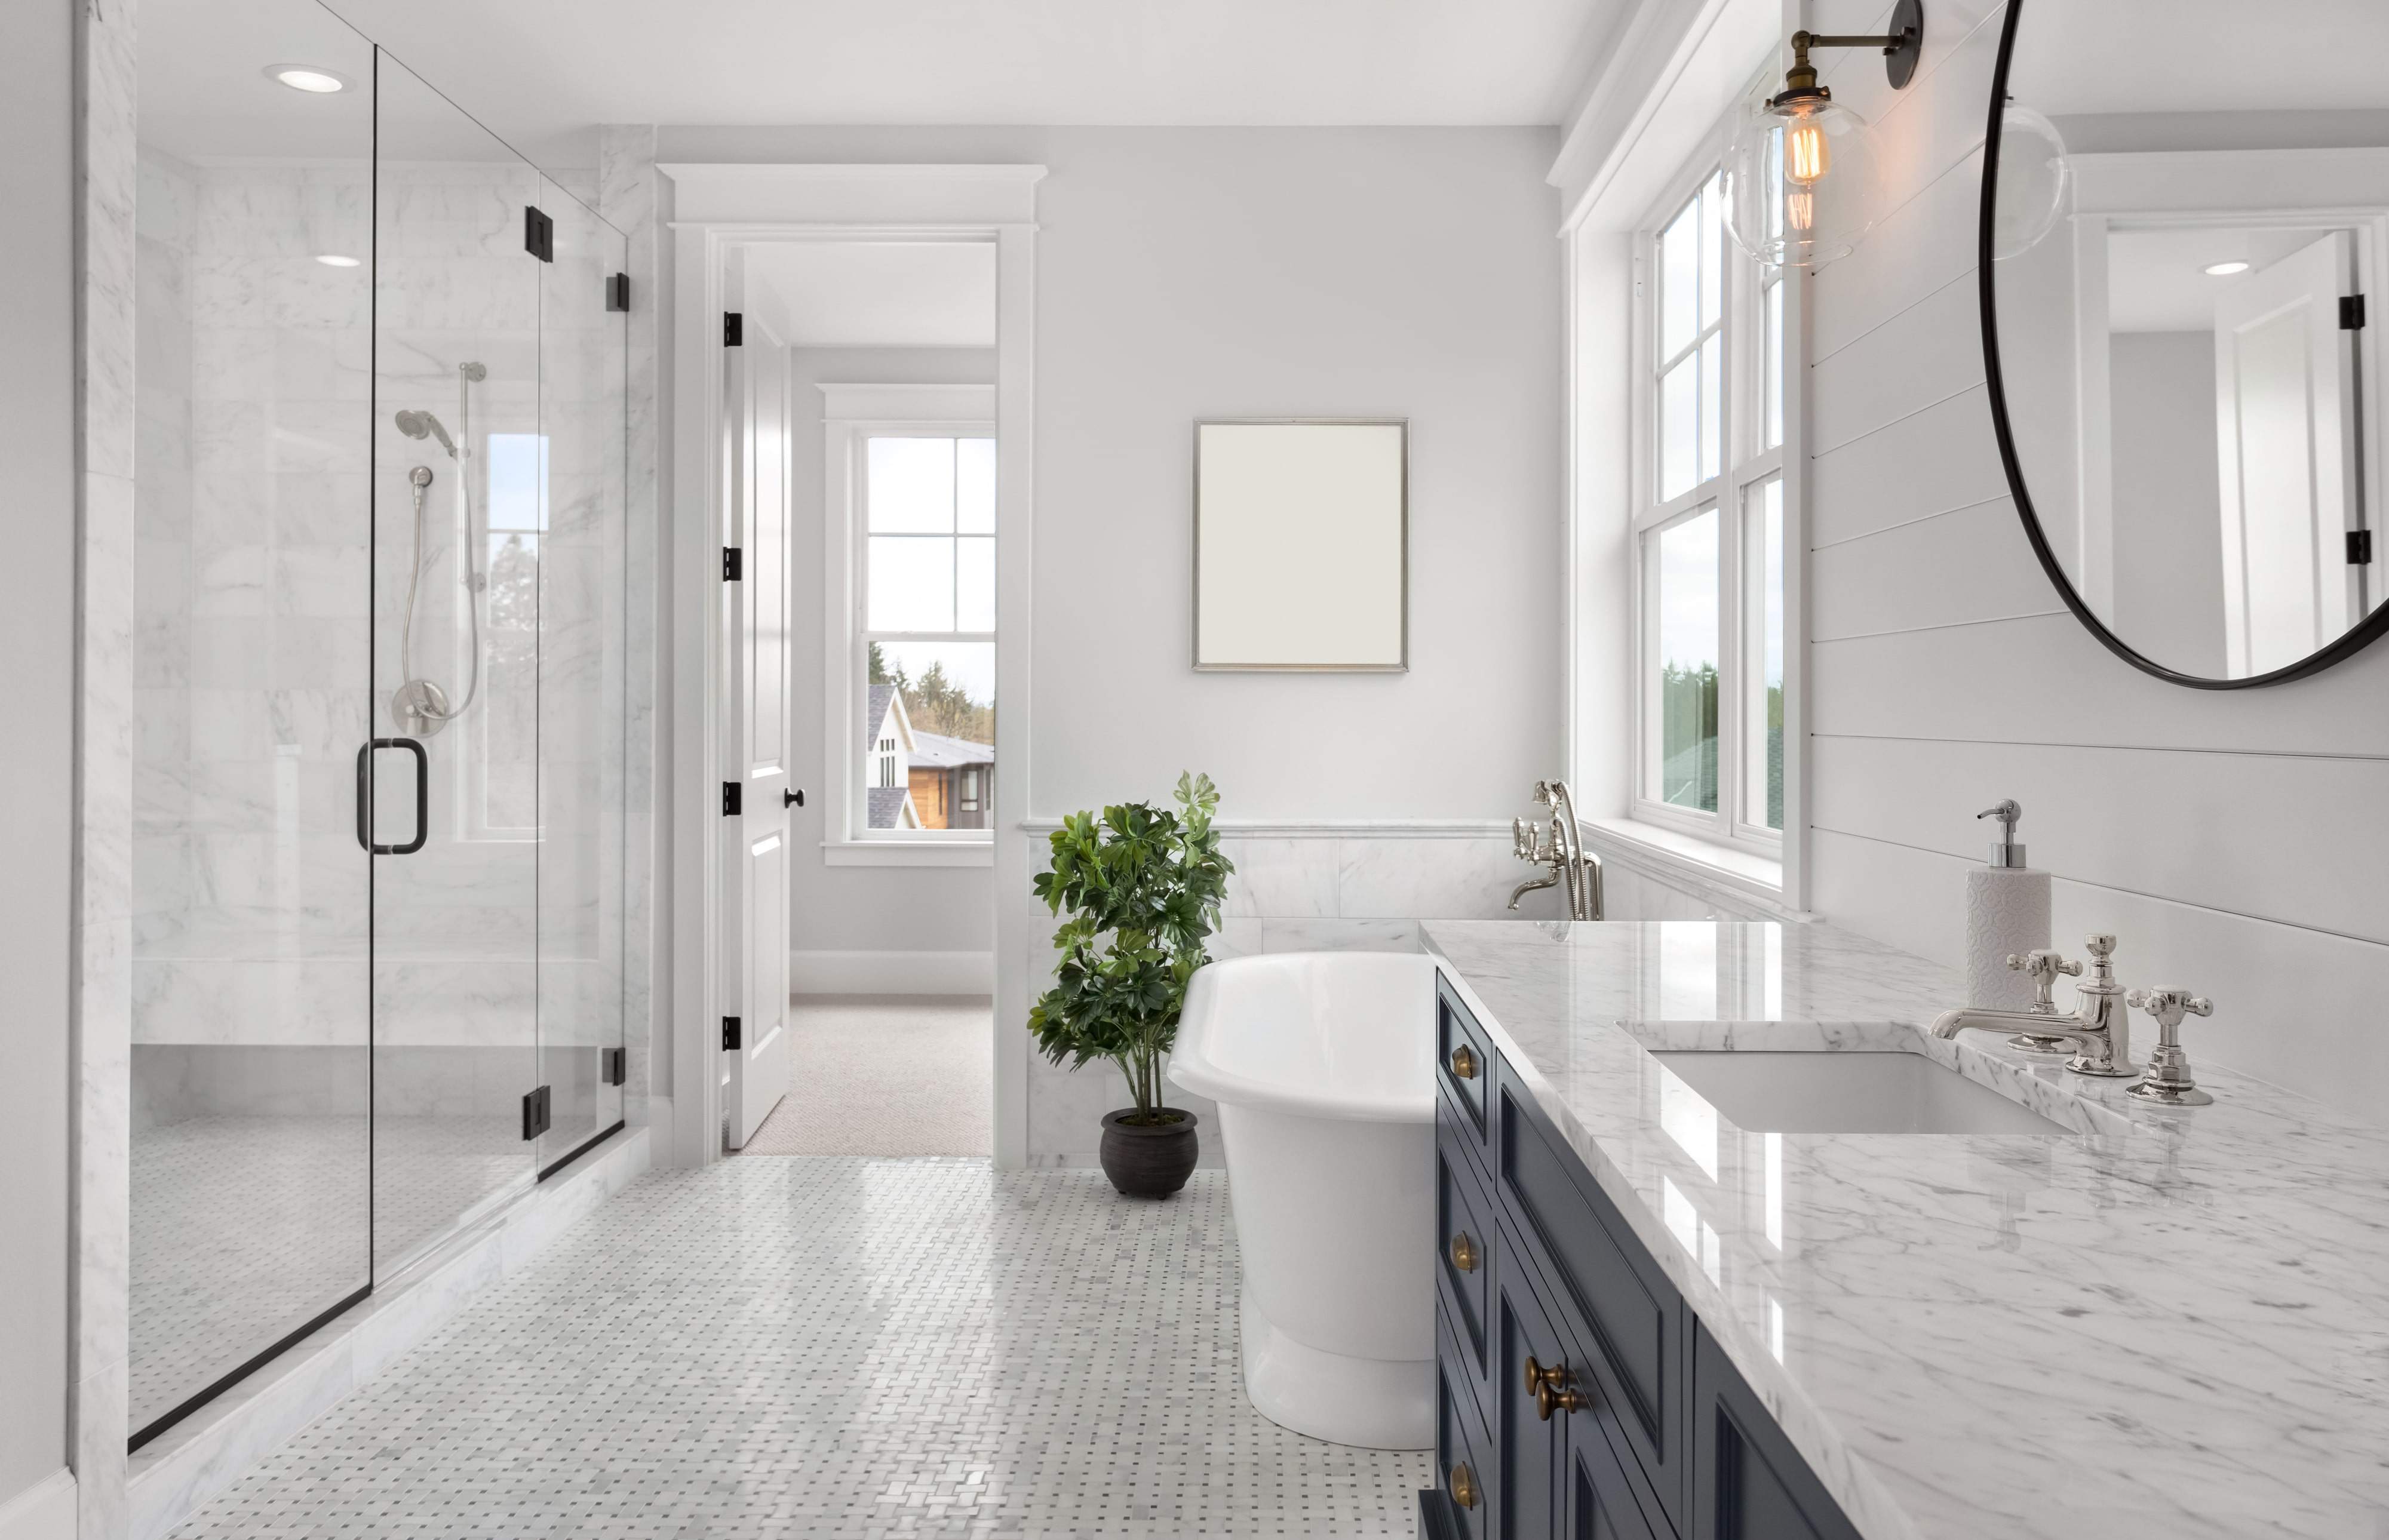 Beautiful bathroom with white tile floor and granite countertop